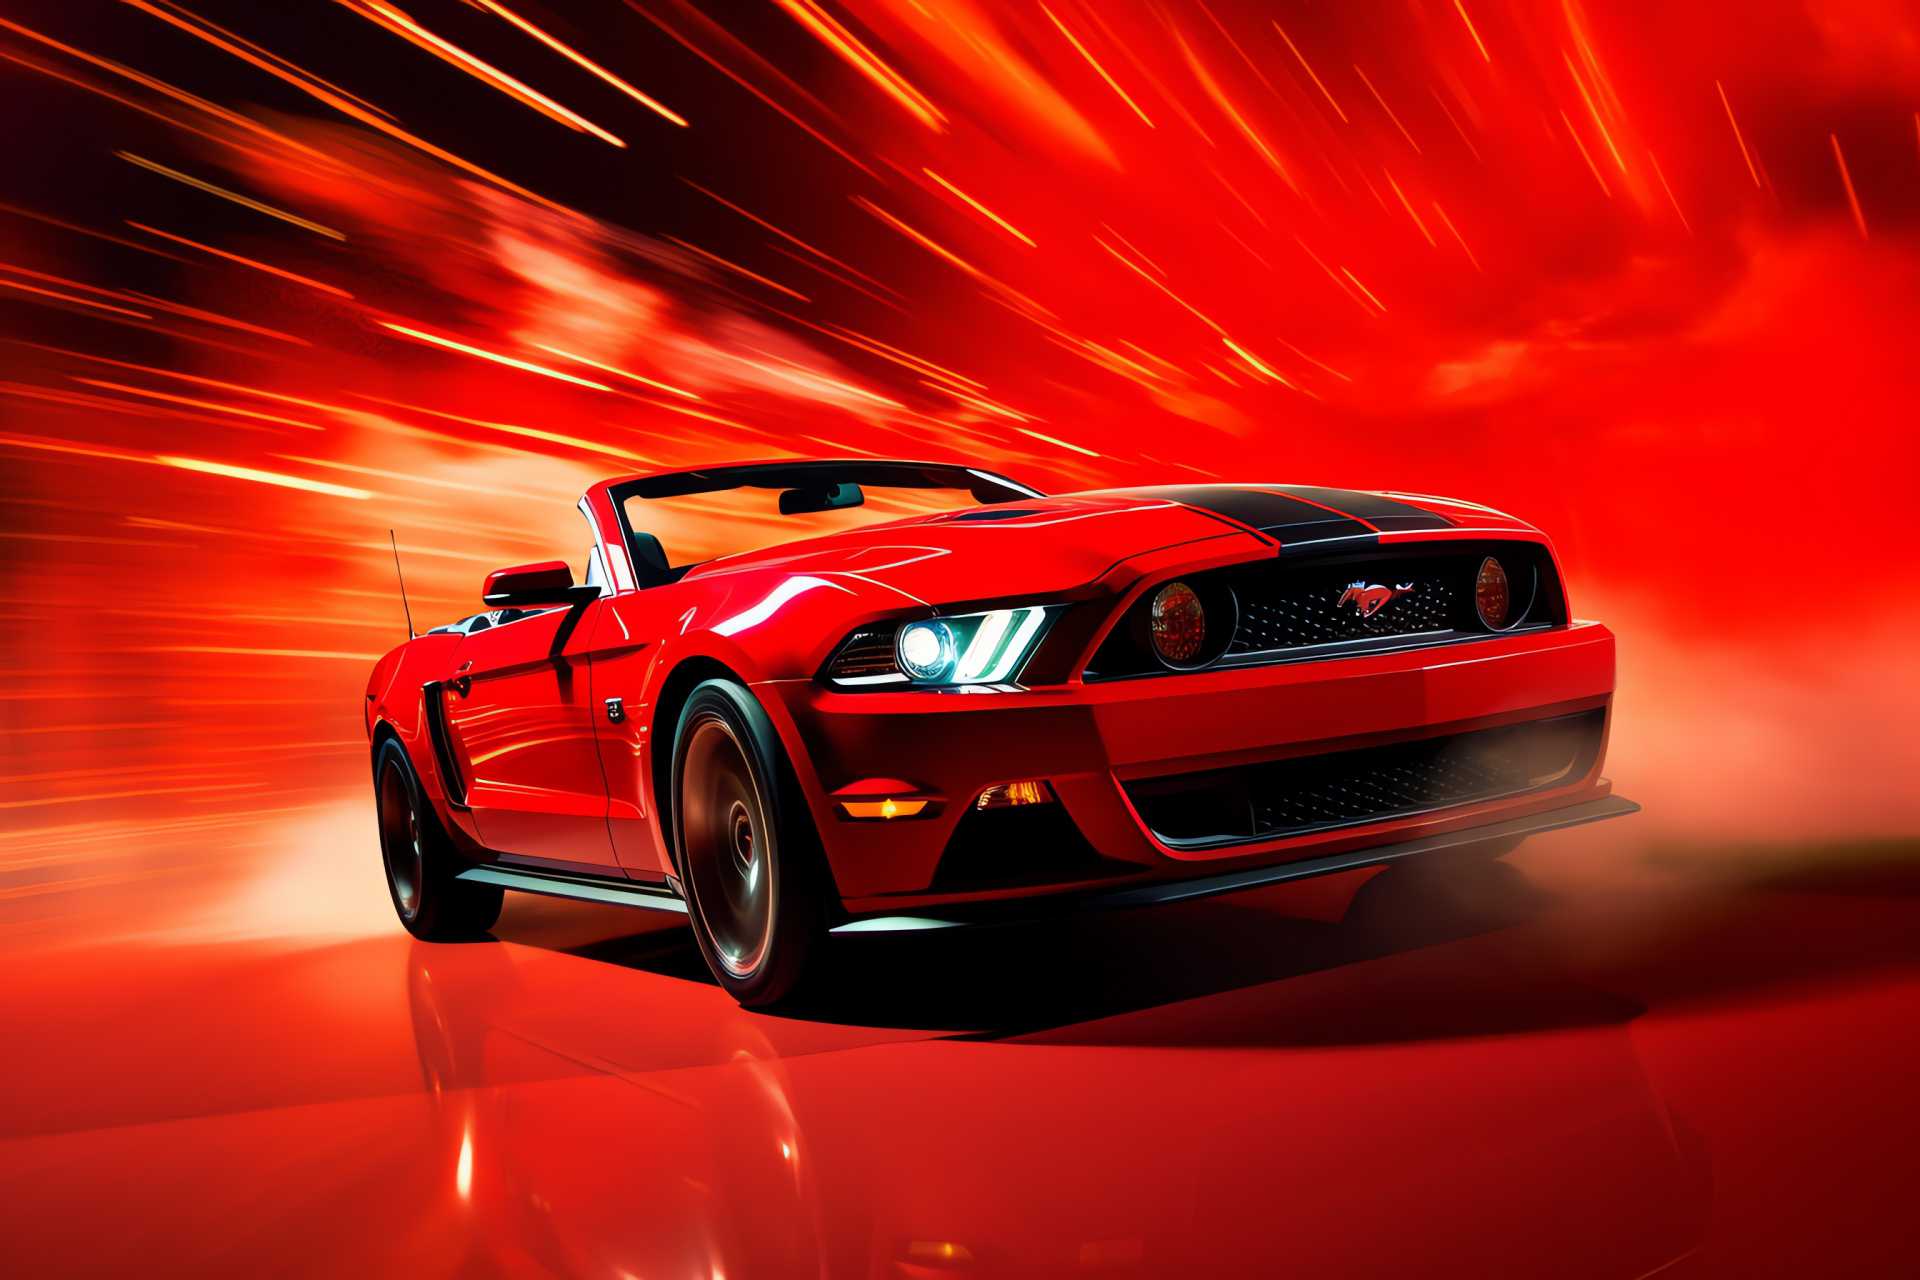 Mustang model, Intense red hue, Mustang engine roar, Sportscar silhouette, High-performance vehicle, HD Desktop Wallpaper